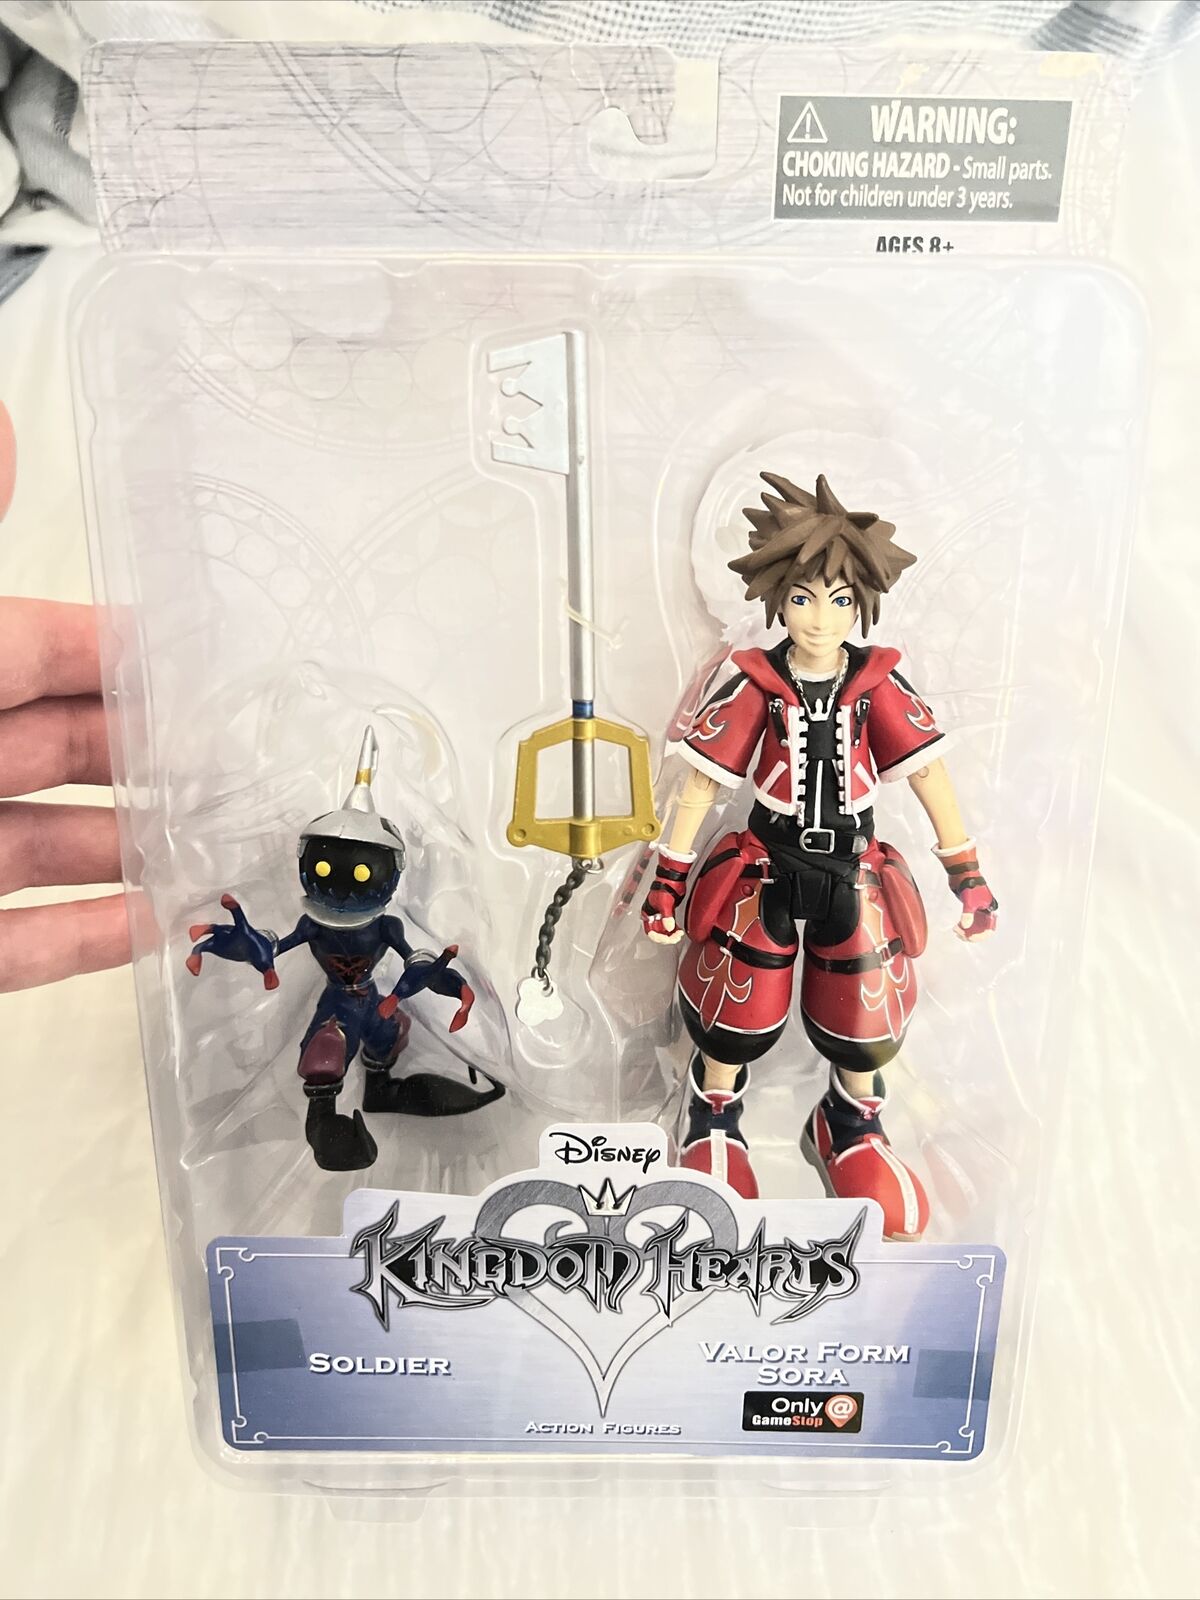 Kingdom Hearts Soldier and Valor Form Sora Action Figure Gamestop Exclusive Toy